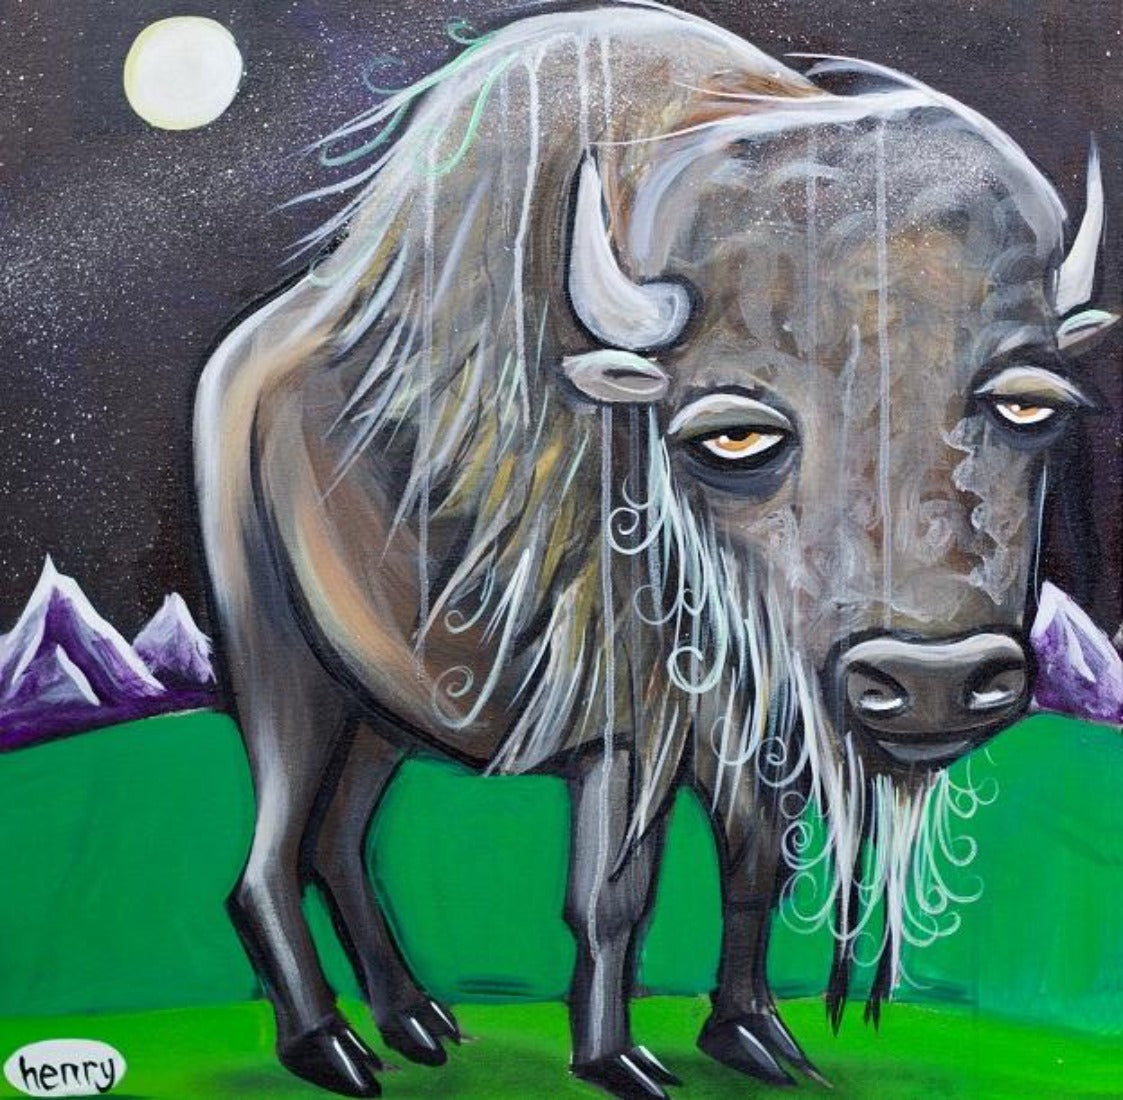 Big Buffalo Canvas Giclee Print Featuring Original Art by Seattle Mural Artist Ryan Henry Ward